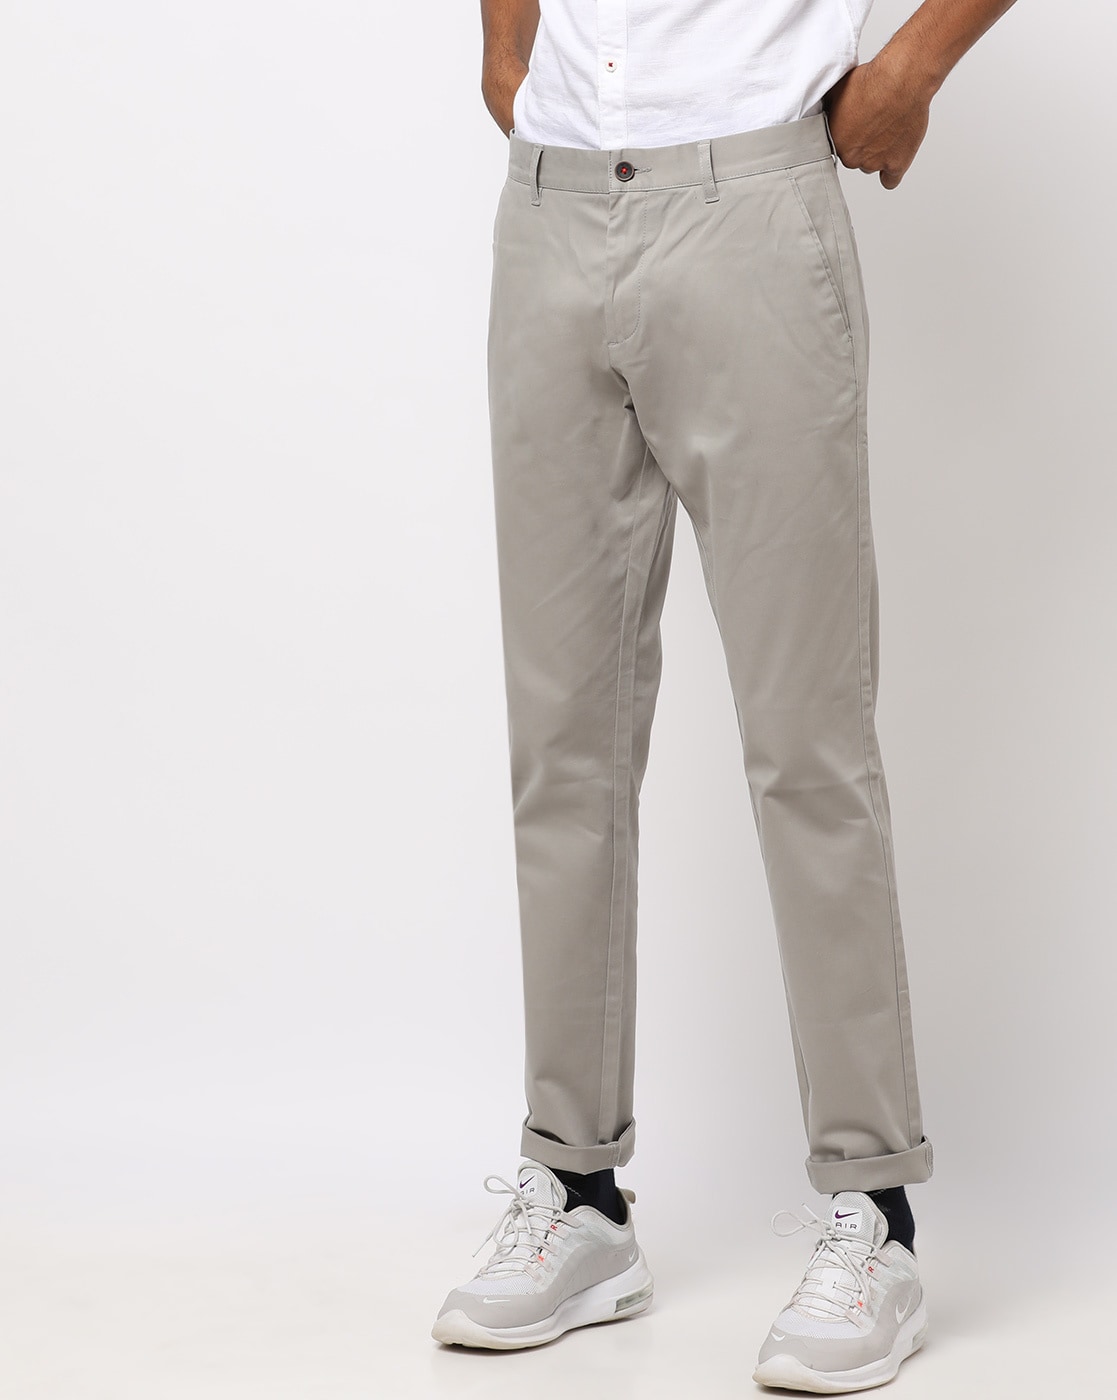 Buy JadeBlue Mens Solid Black Terry Rayon Slim Fit Formal Trouser  POTR34 at Amazonin